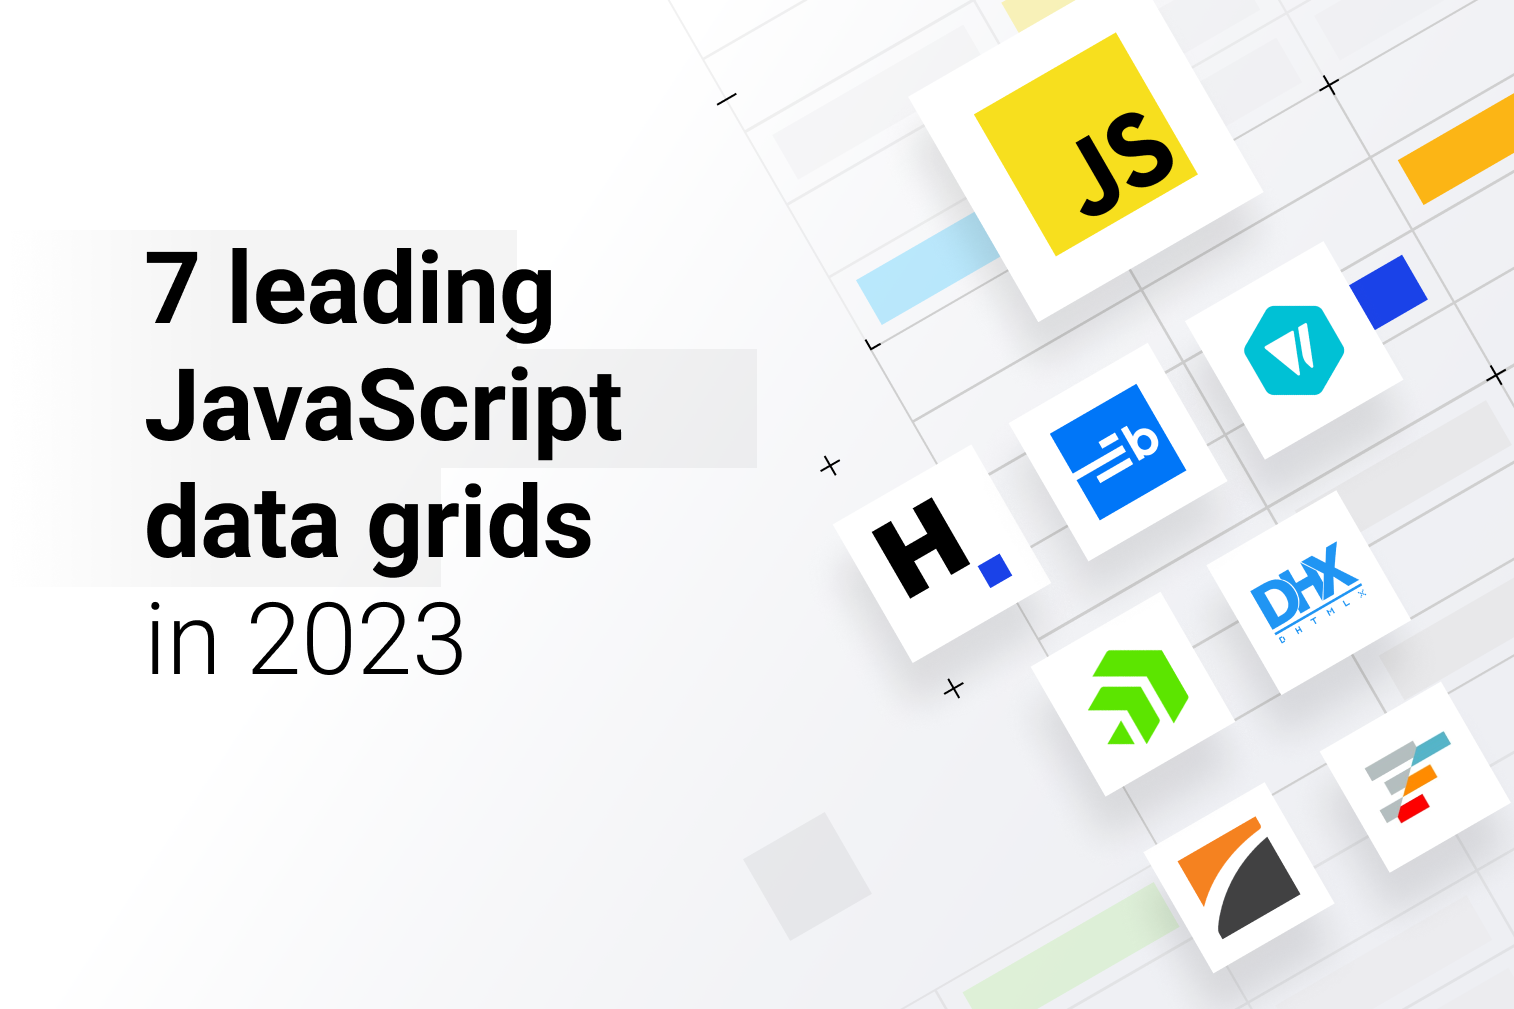 7 leading JavaScript data grids in 2023